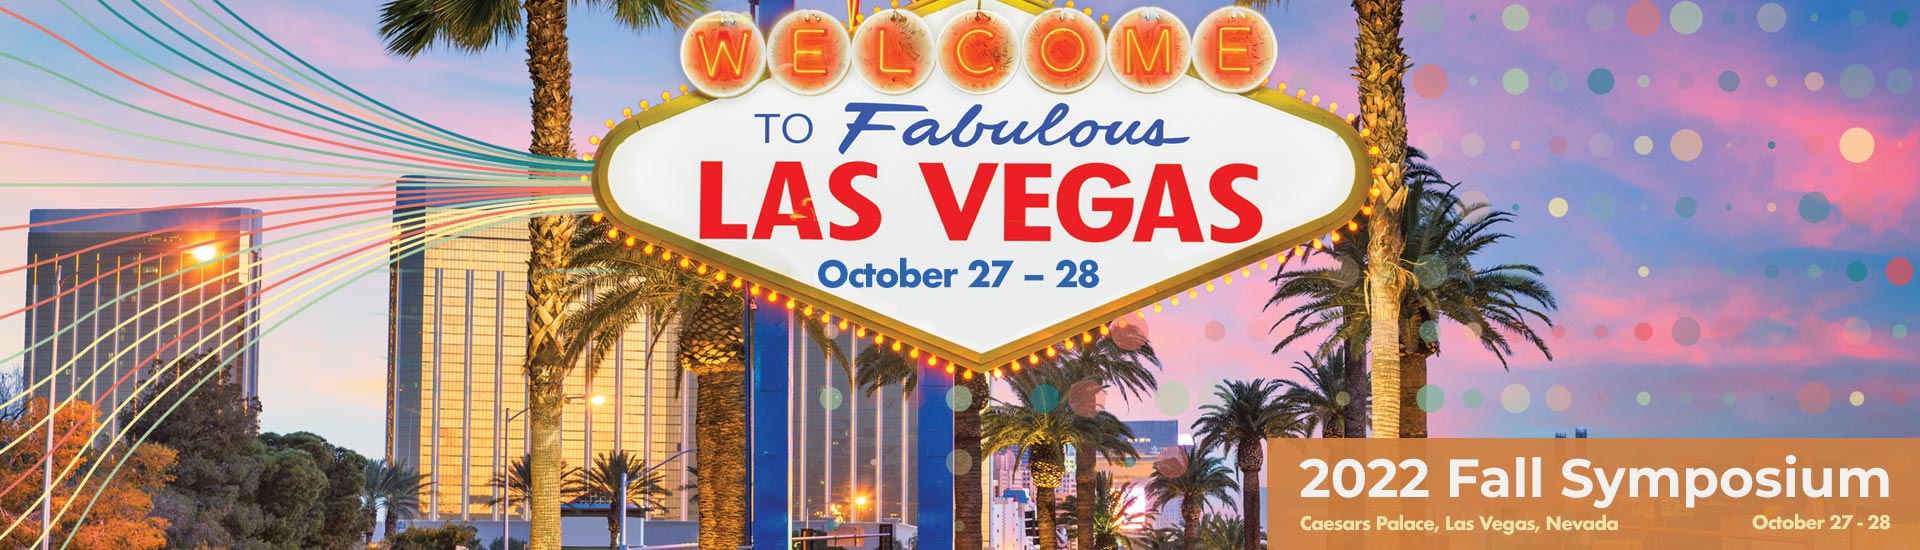 2022 Fall Symposium • Las Vegas, Nevada • October 27-28